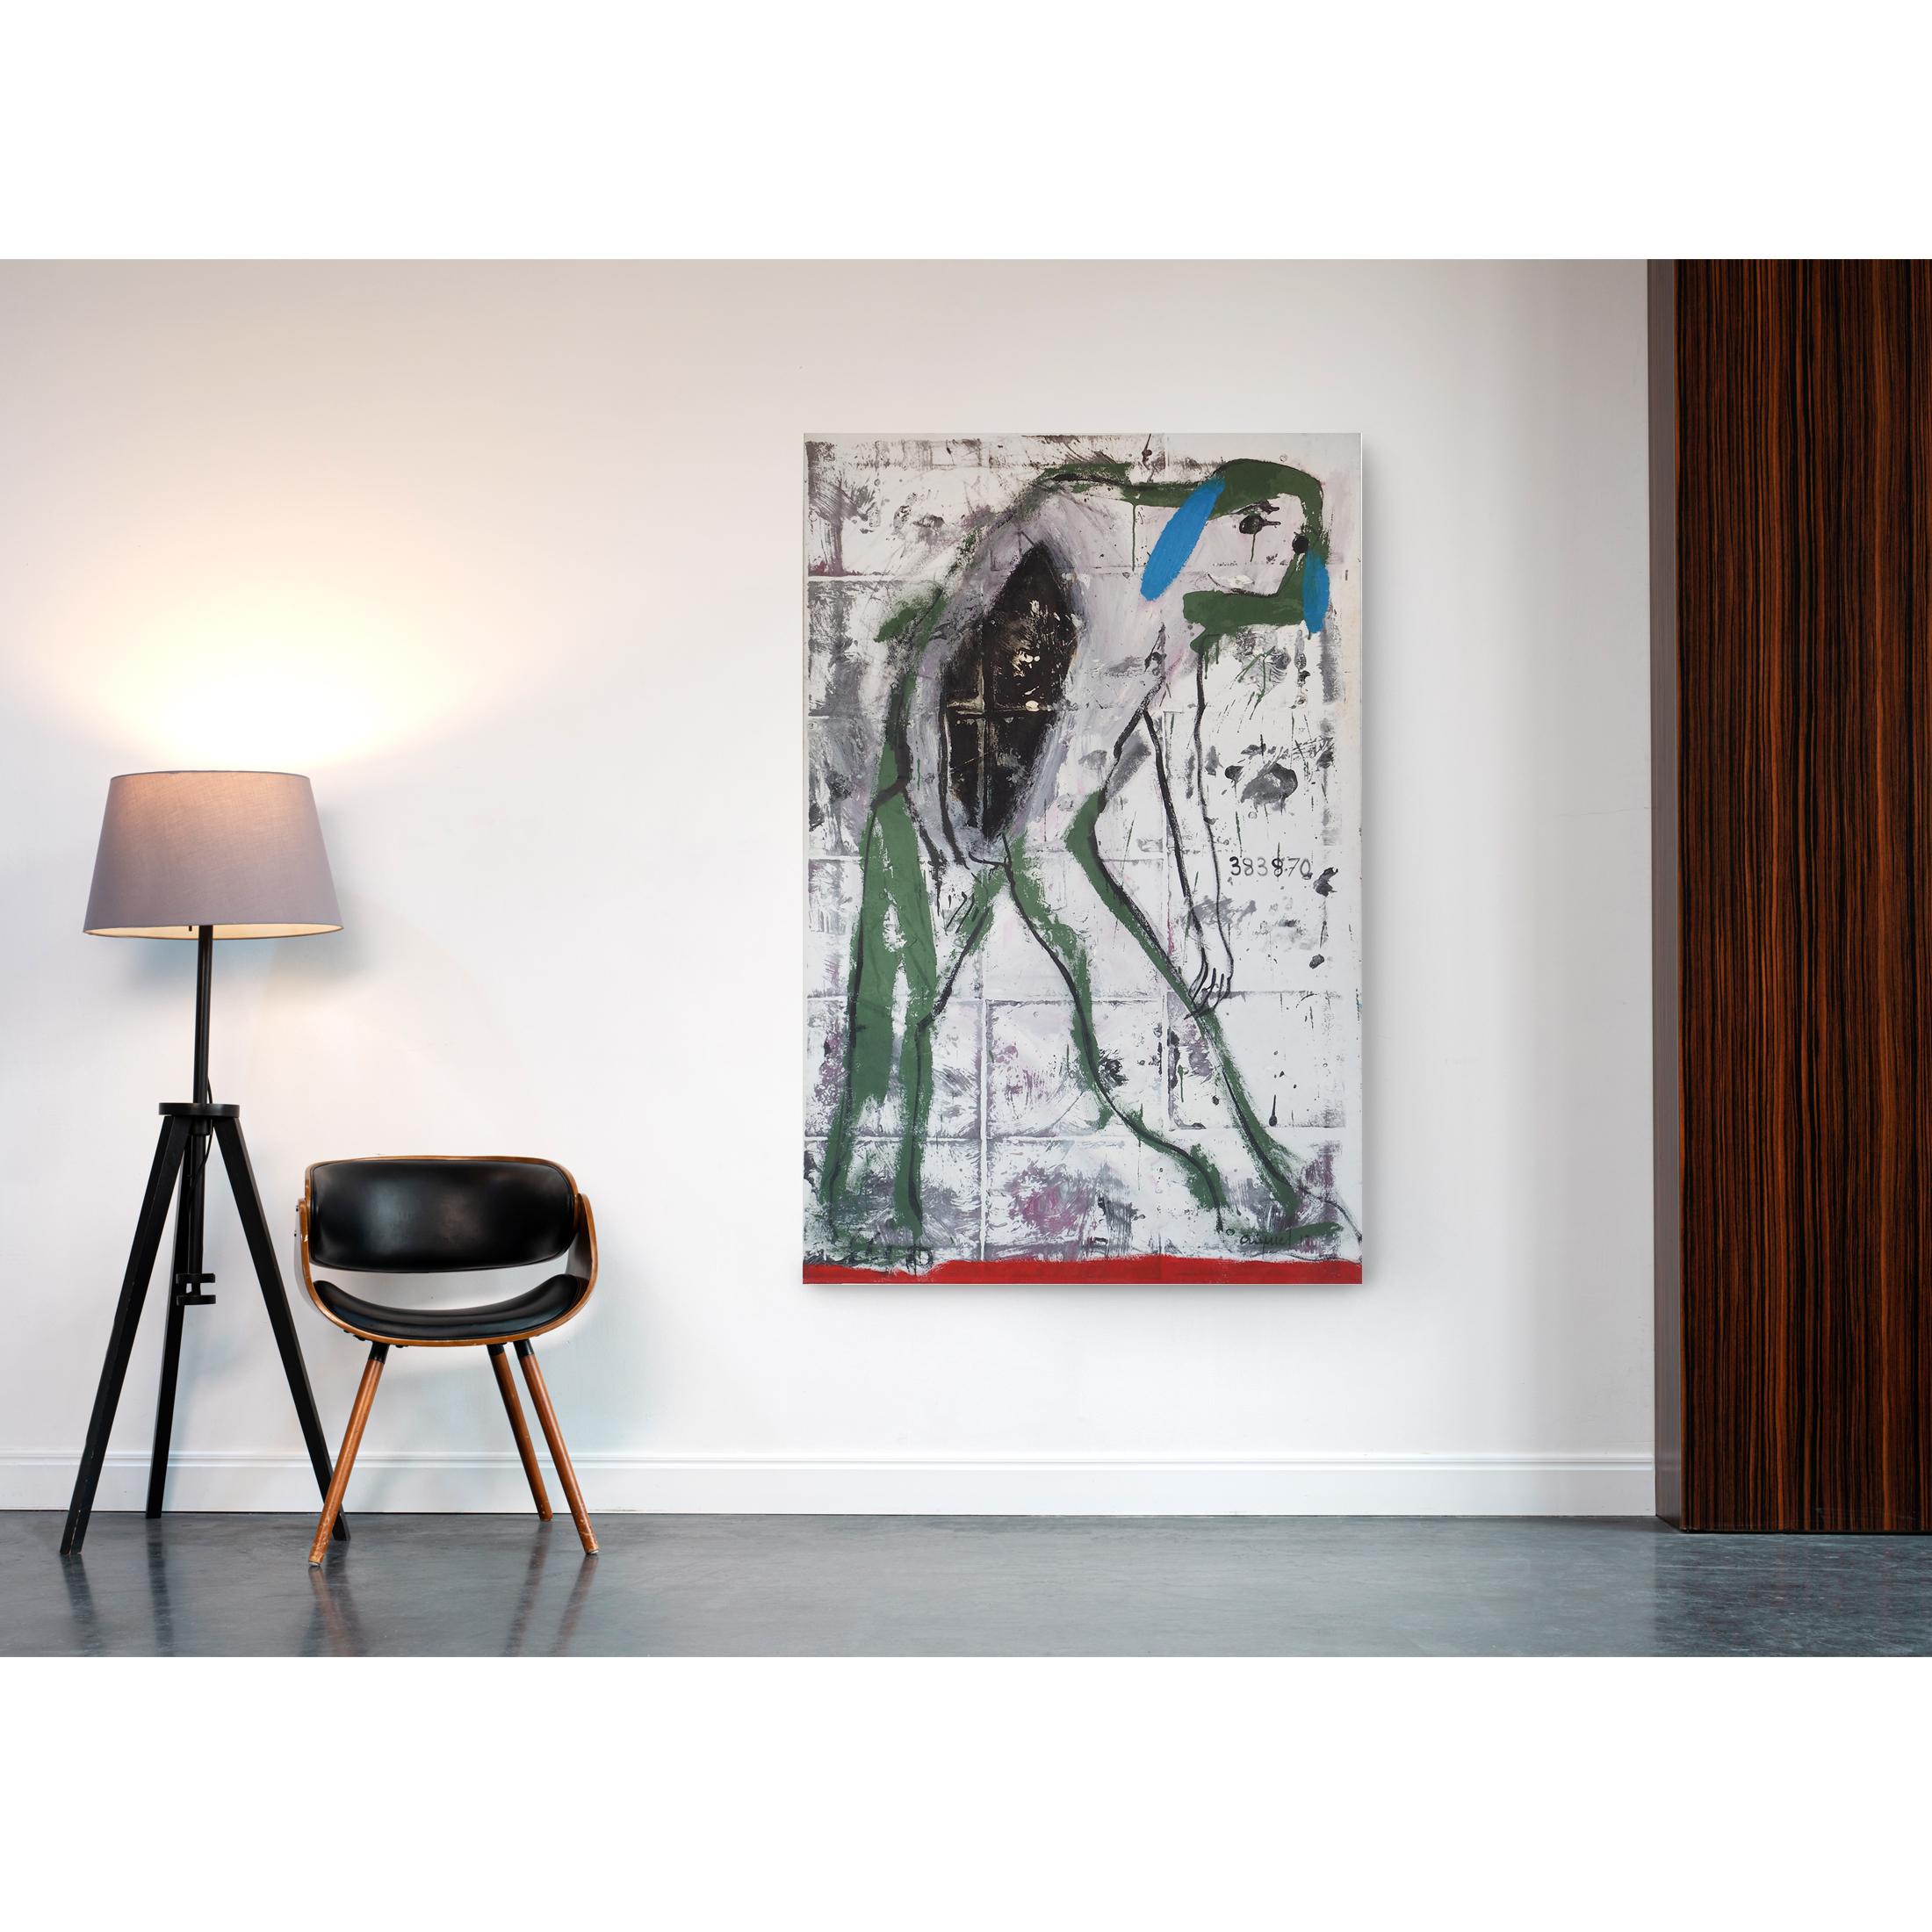 Francky Criquet - NOT TITLE /urban - oil on canvas - 95x148cm For Sale 7